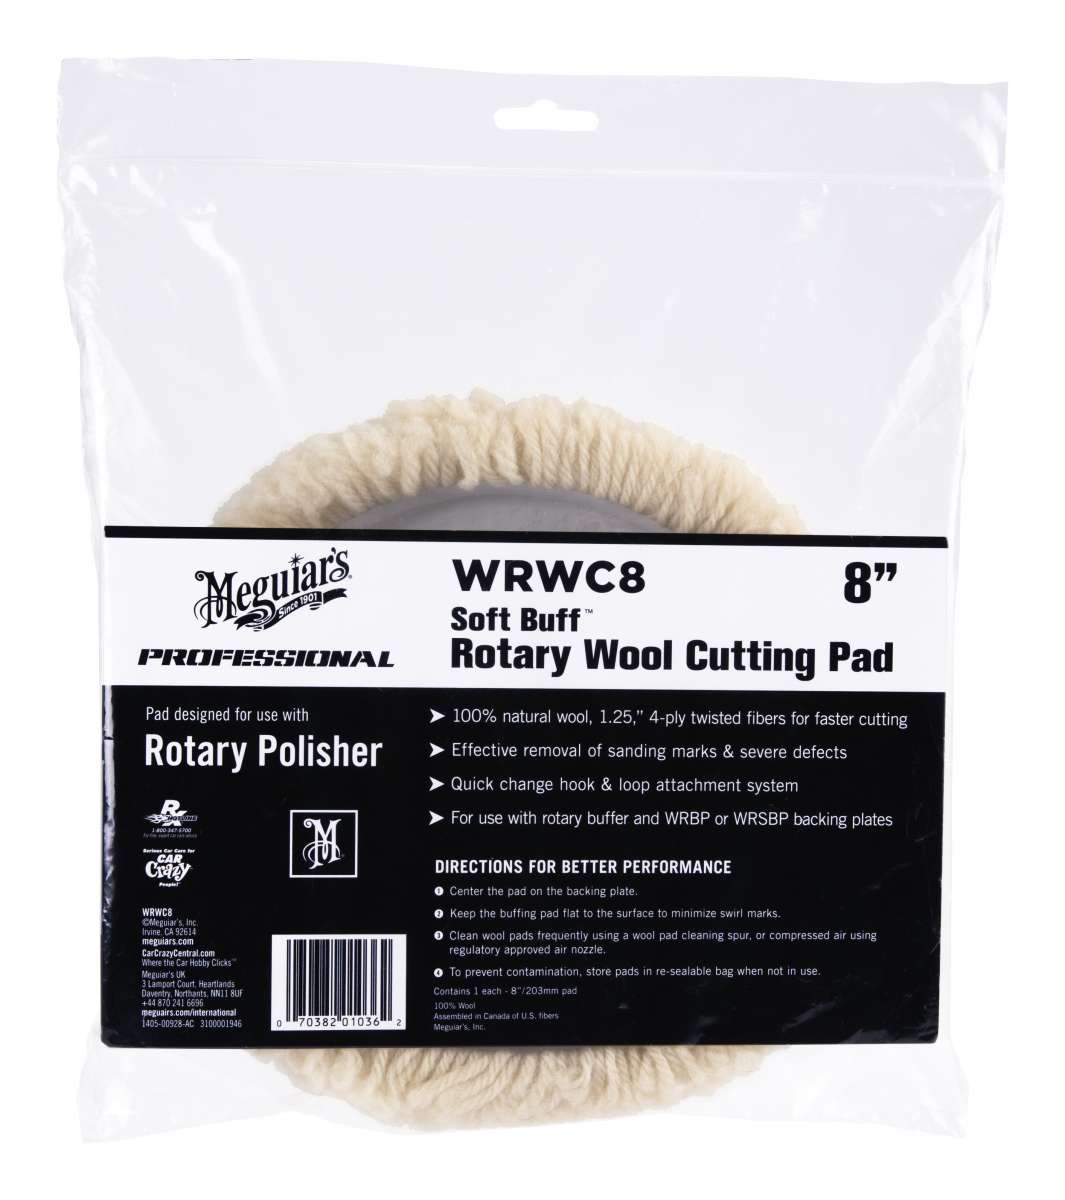  Meguiar's Soft Buff Rotary Wool Cutting Pad